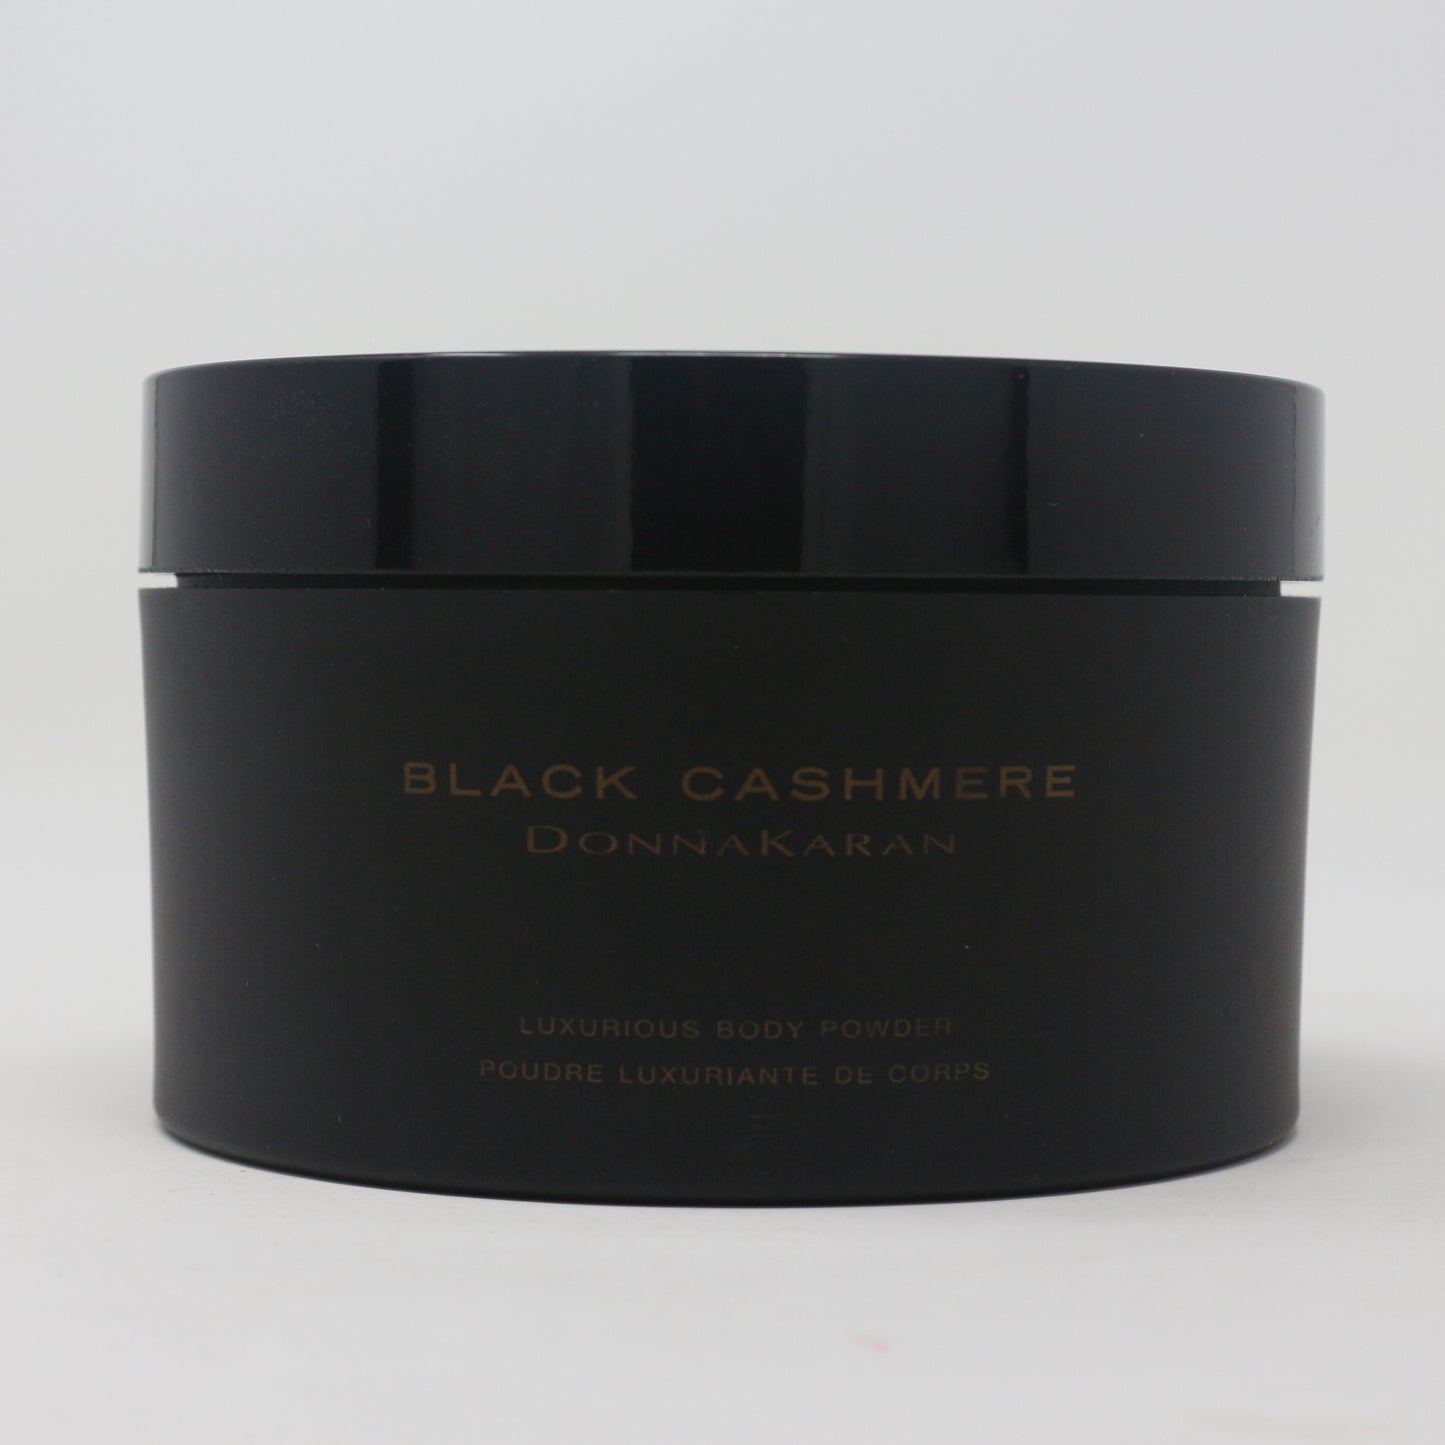 Black Cashmere Luxurious Body Powder mL